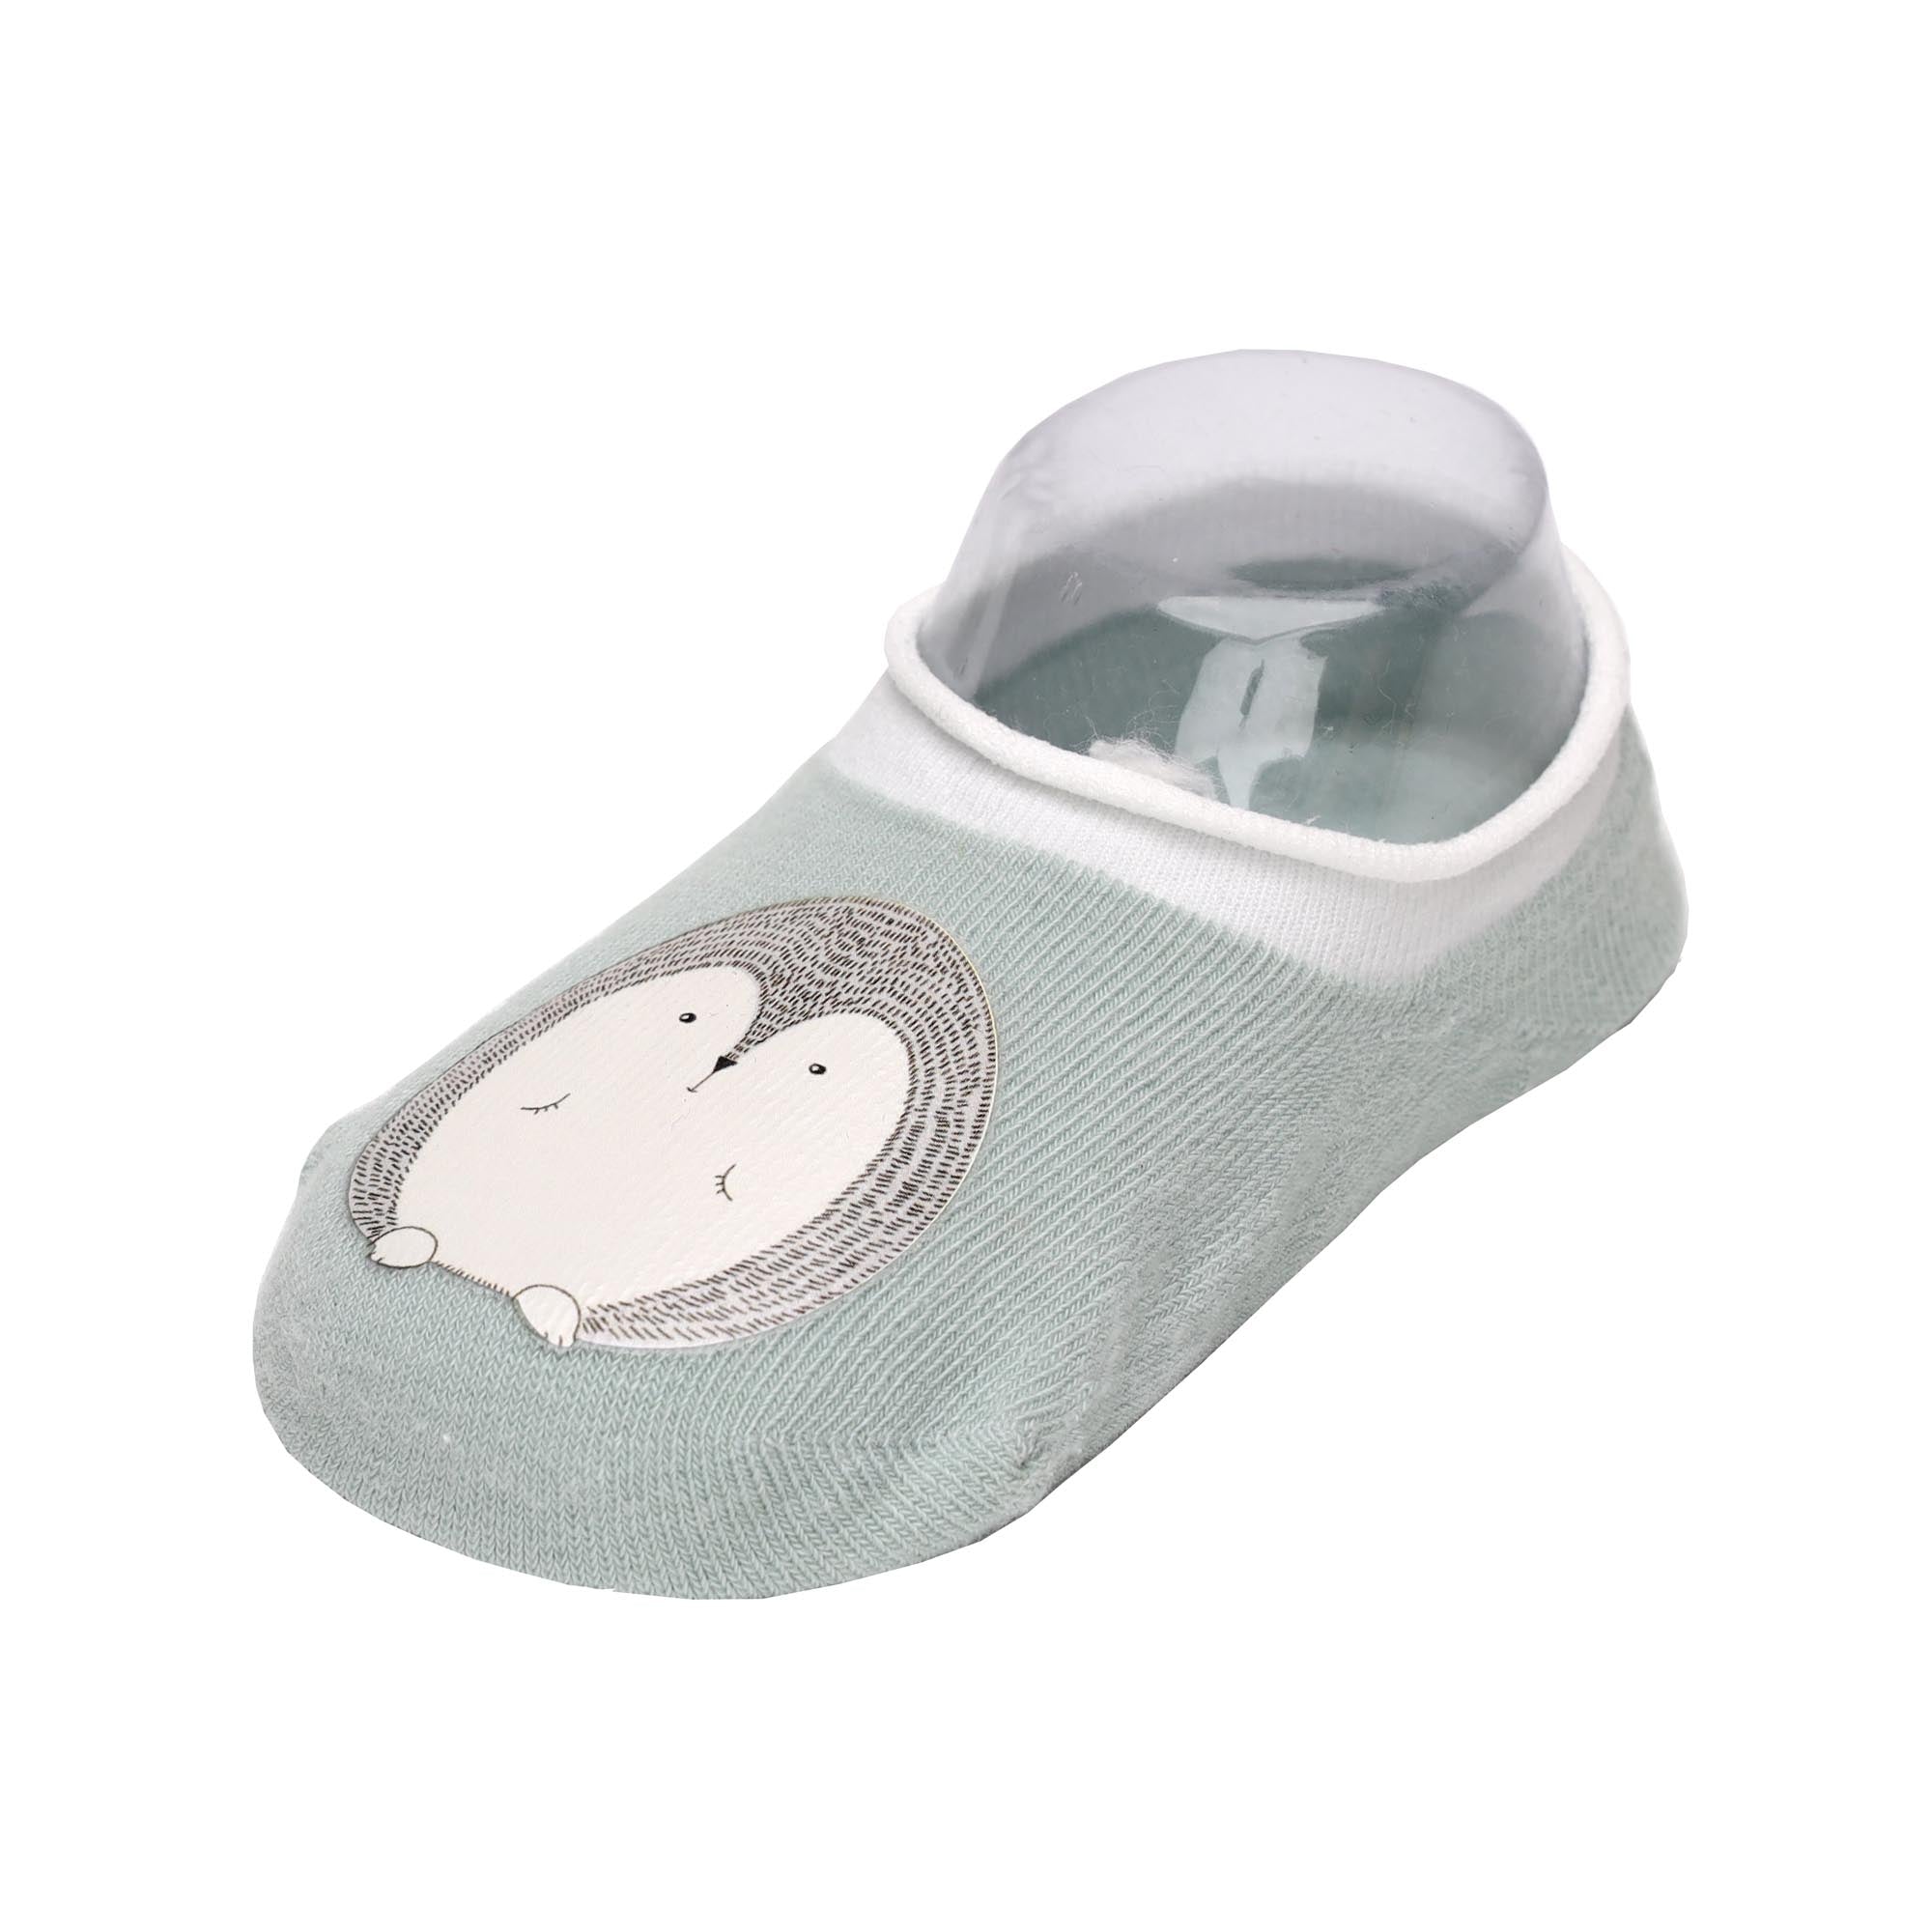 Baby Penguins Flat Socks - 2 Pack (6-24 Months)